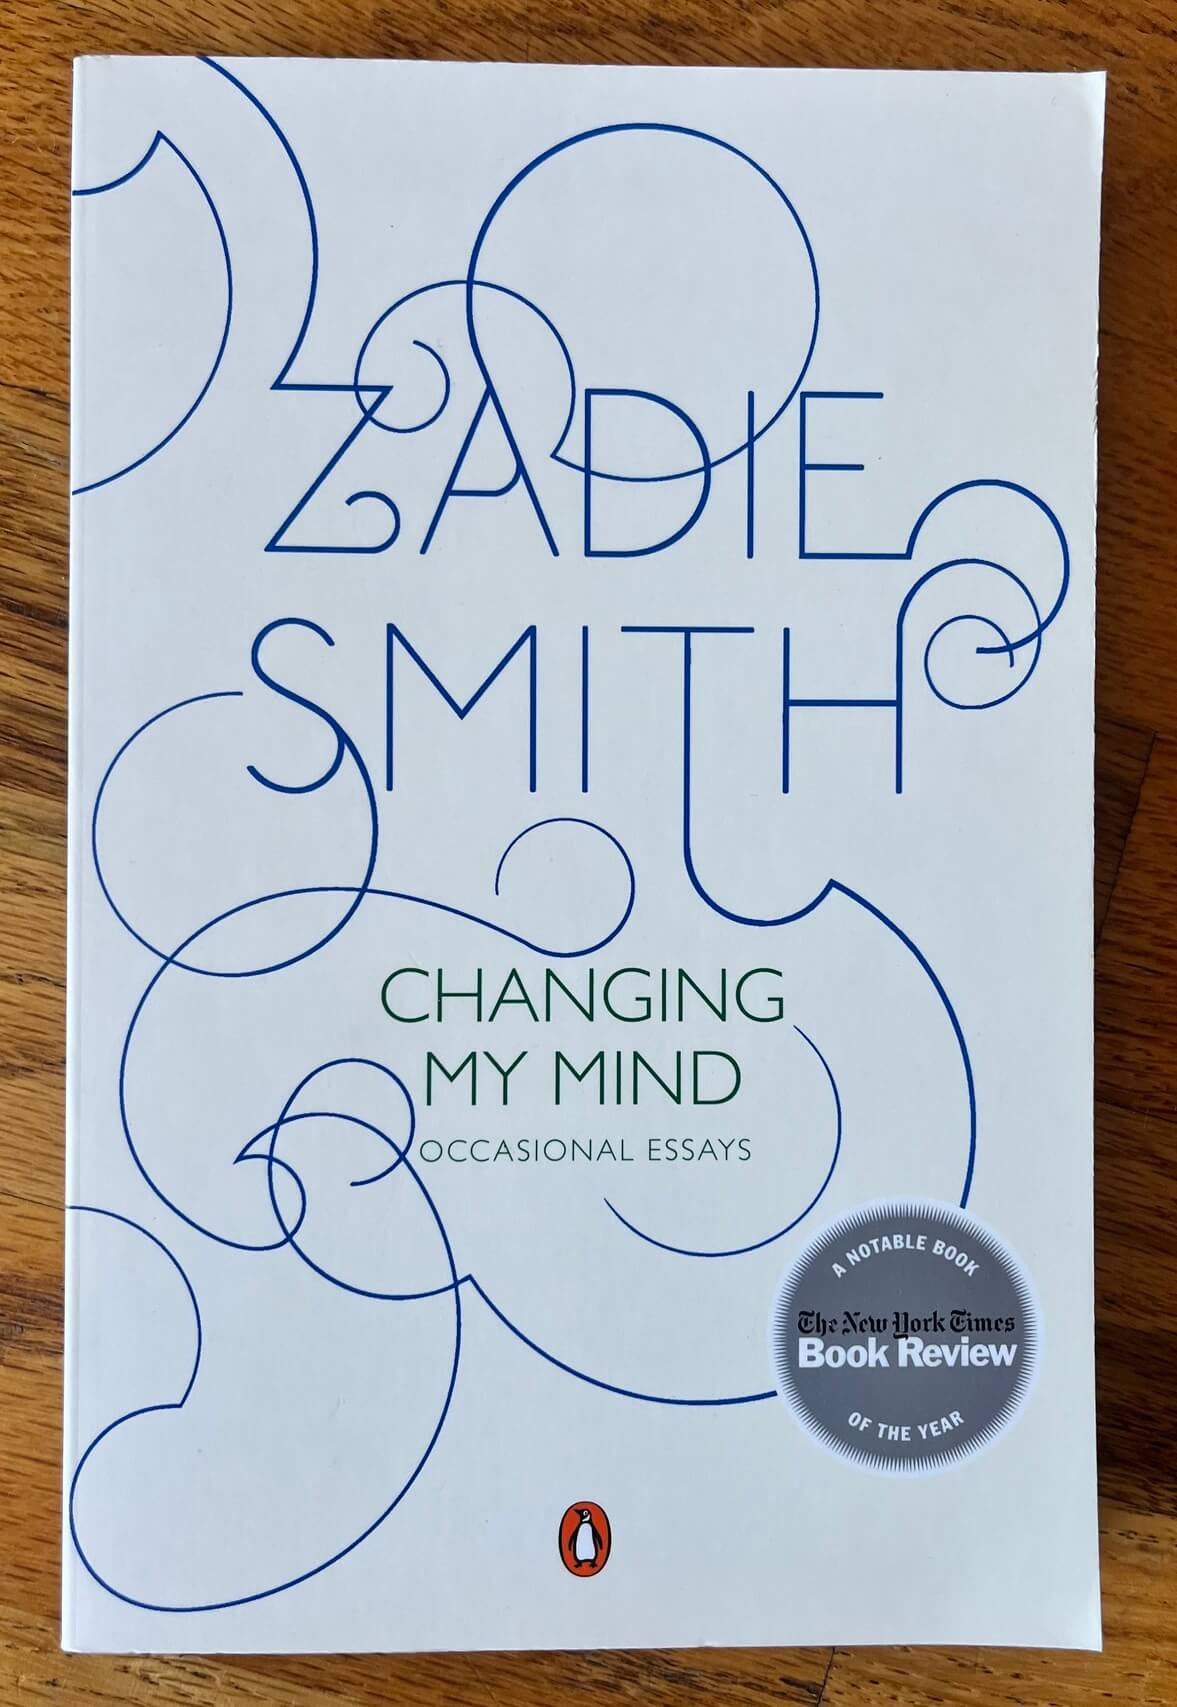 “Changing My Mind” by Zadie Smith